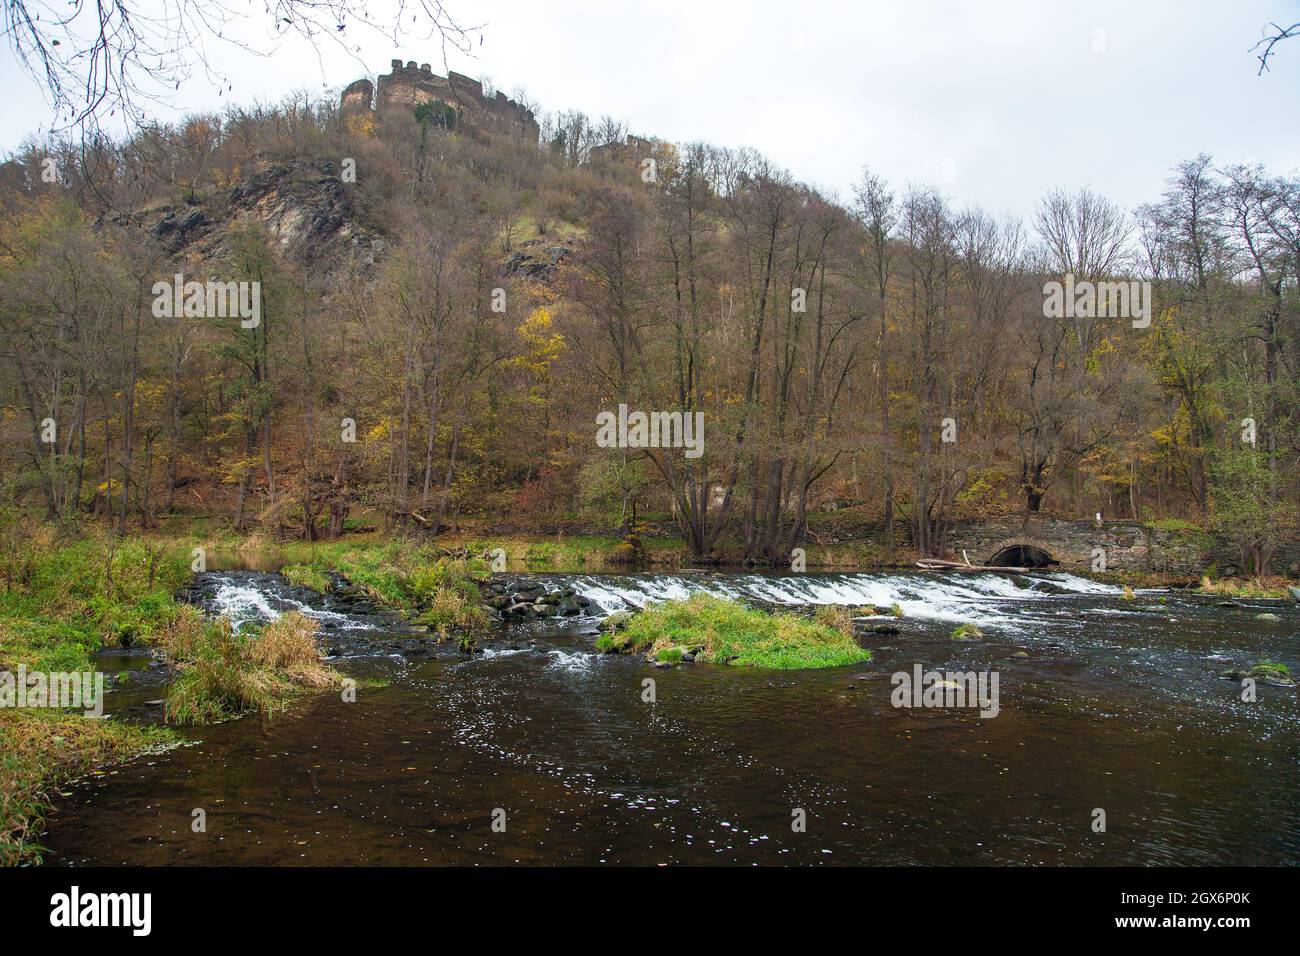 Dyje or Thaya river, Novy Hradek castle ruin, national park Podyji or nationalpark Thayatal, Czech Republic and Austria border Stock Photo